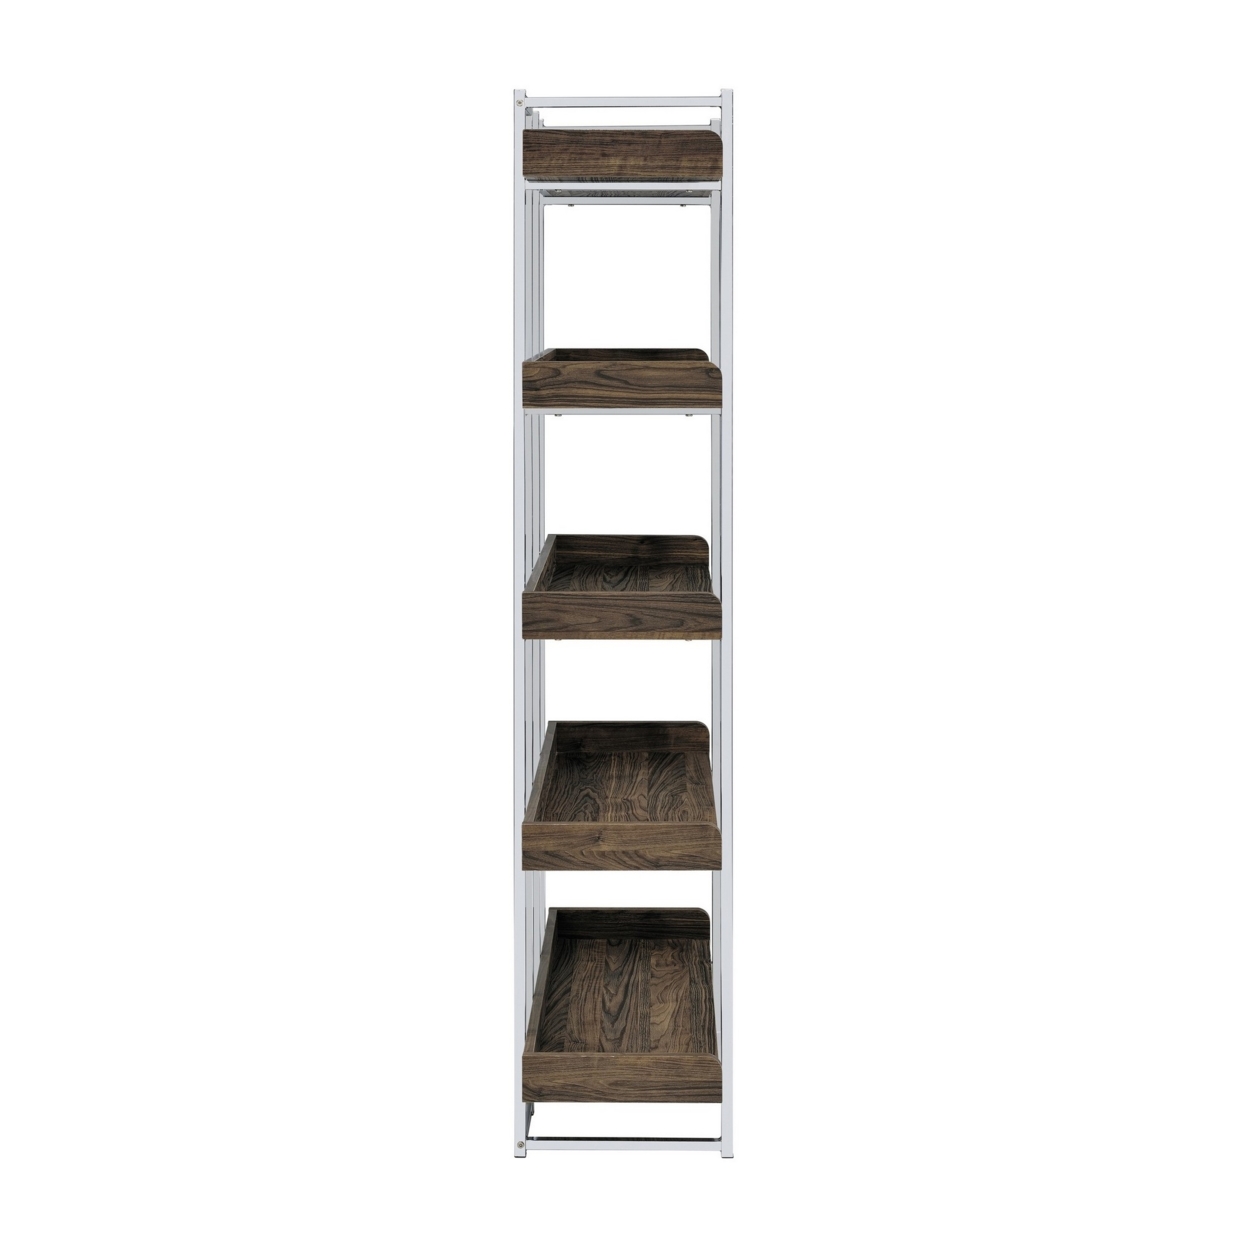 Pam 70 Inch Bookcase, 5 Wood Shelves With Raised Edges, Chrome Metal Frame- Saltoro Sherpi